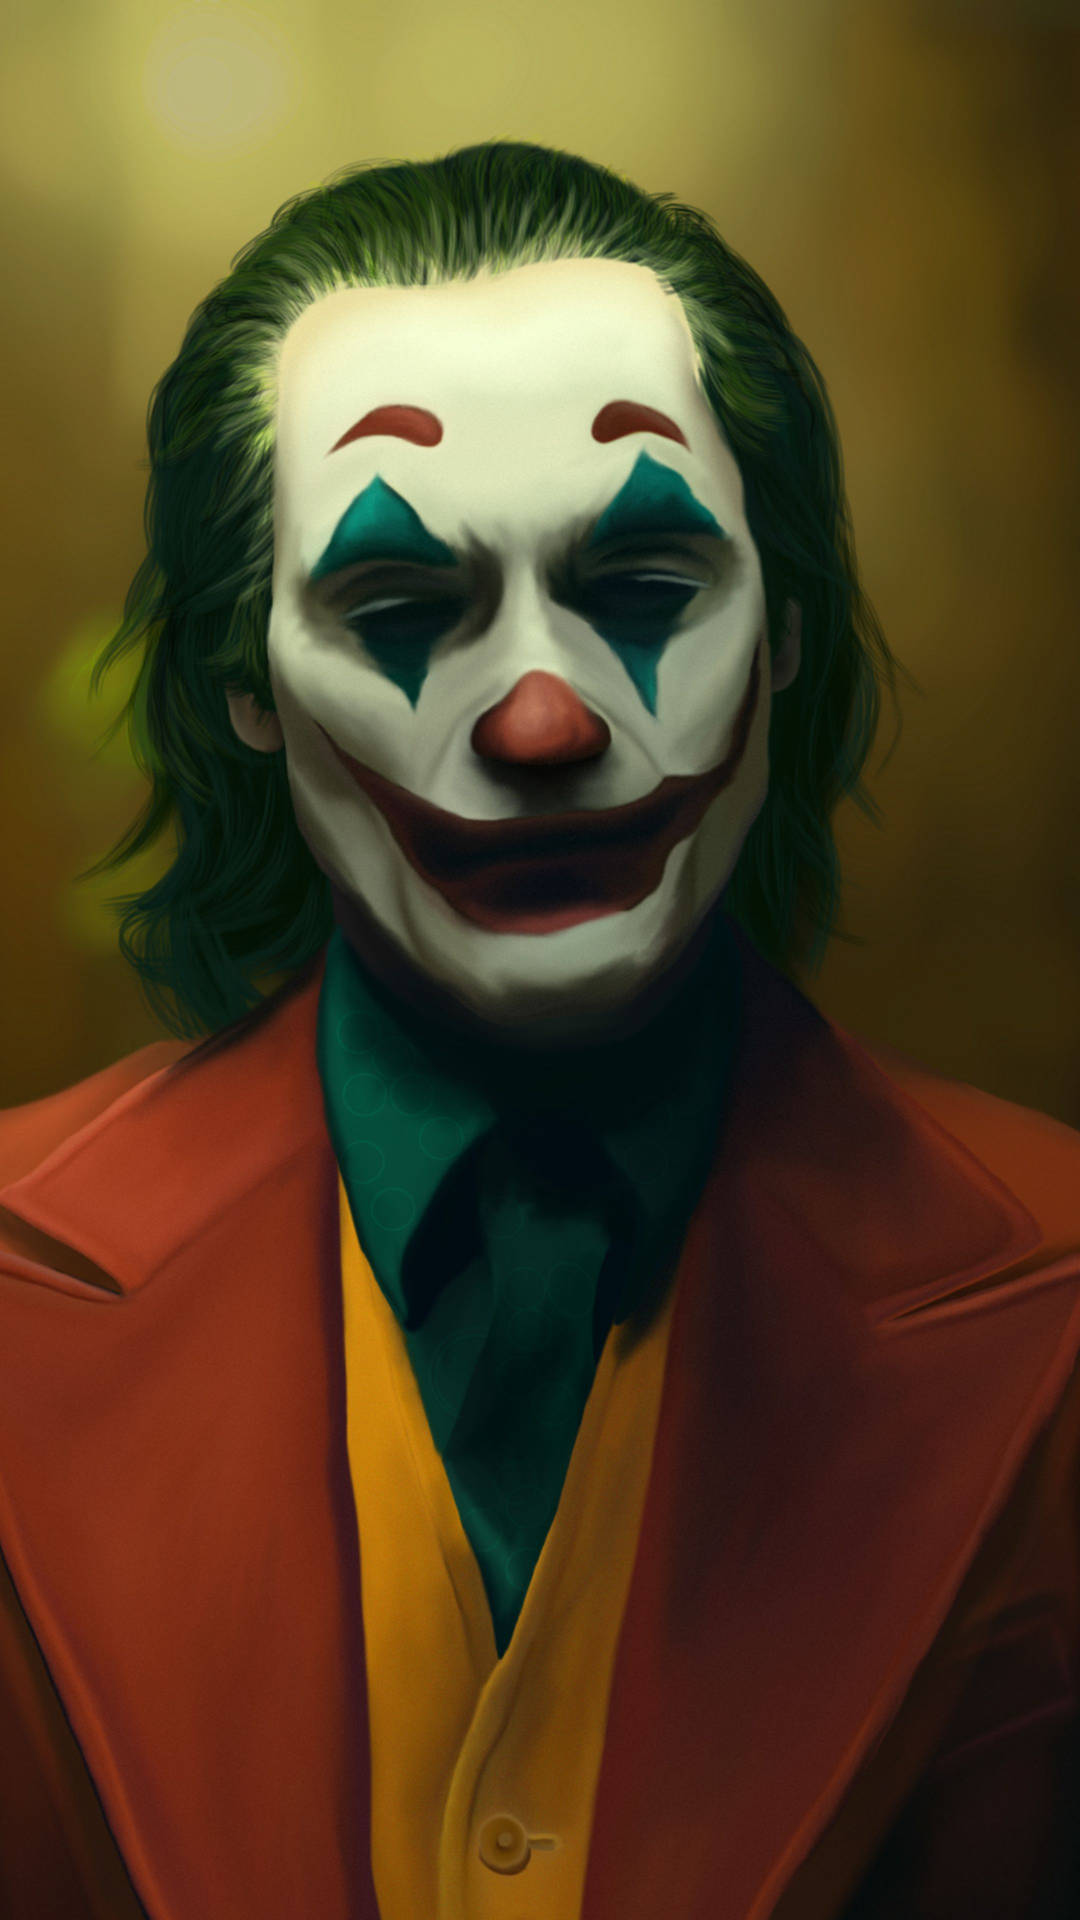 Dark Mystique of Gotham City - Joker iPhone Wallpaper Wallpaper